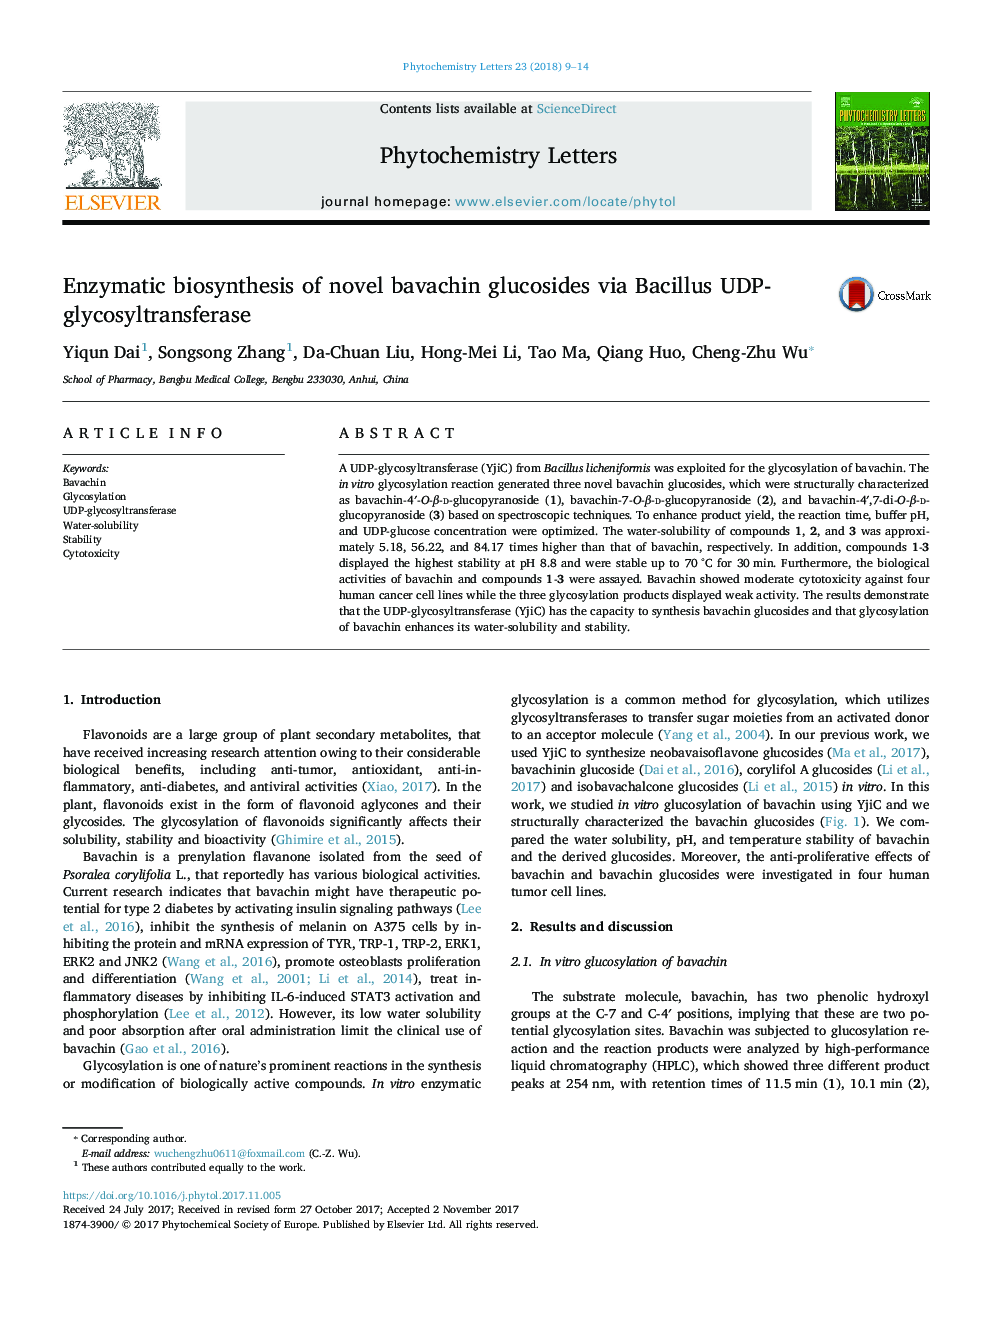 Enzymatic biosynthesis of novel bavachin glucosides via Bacillus UDP-glycosyltransferase